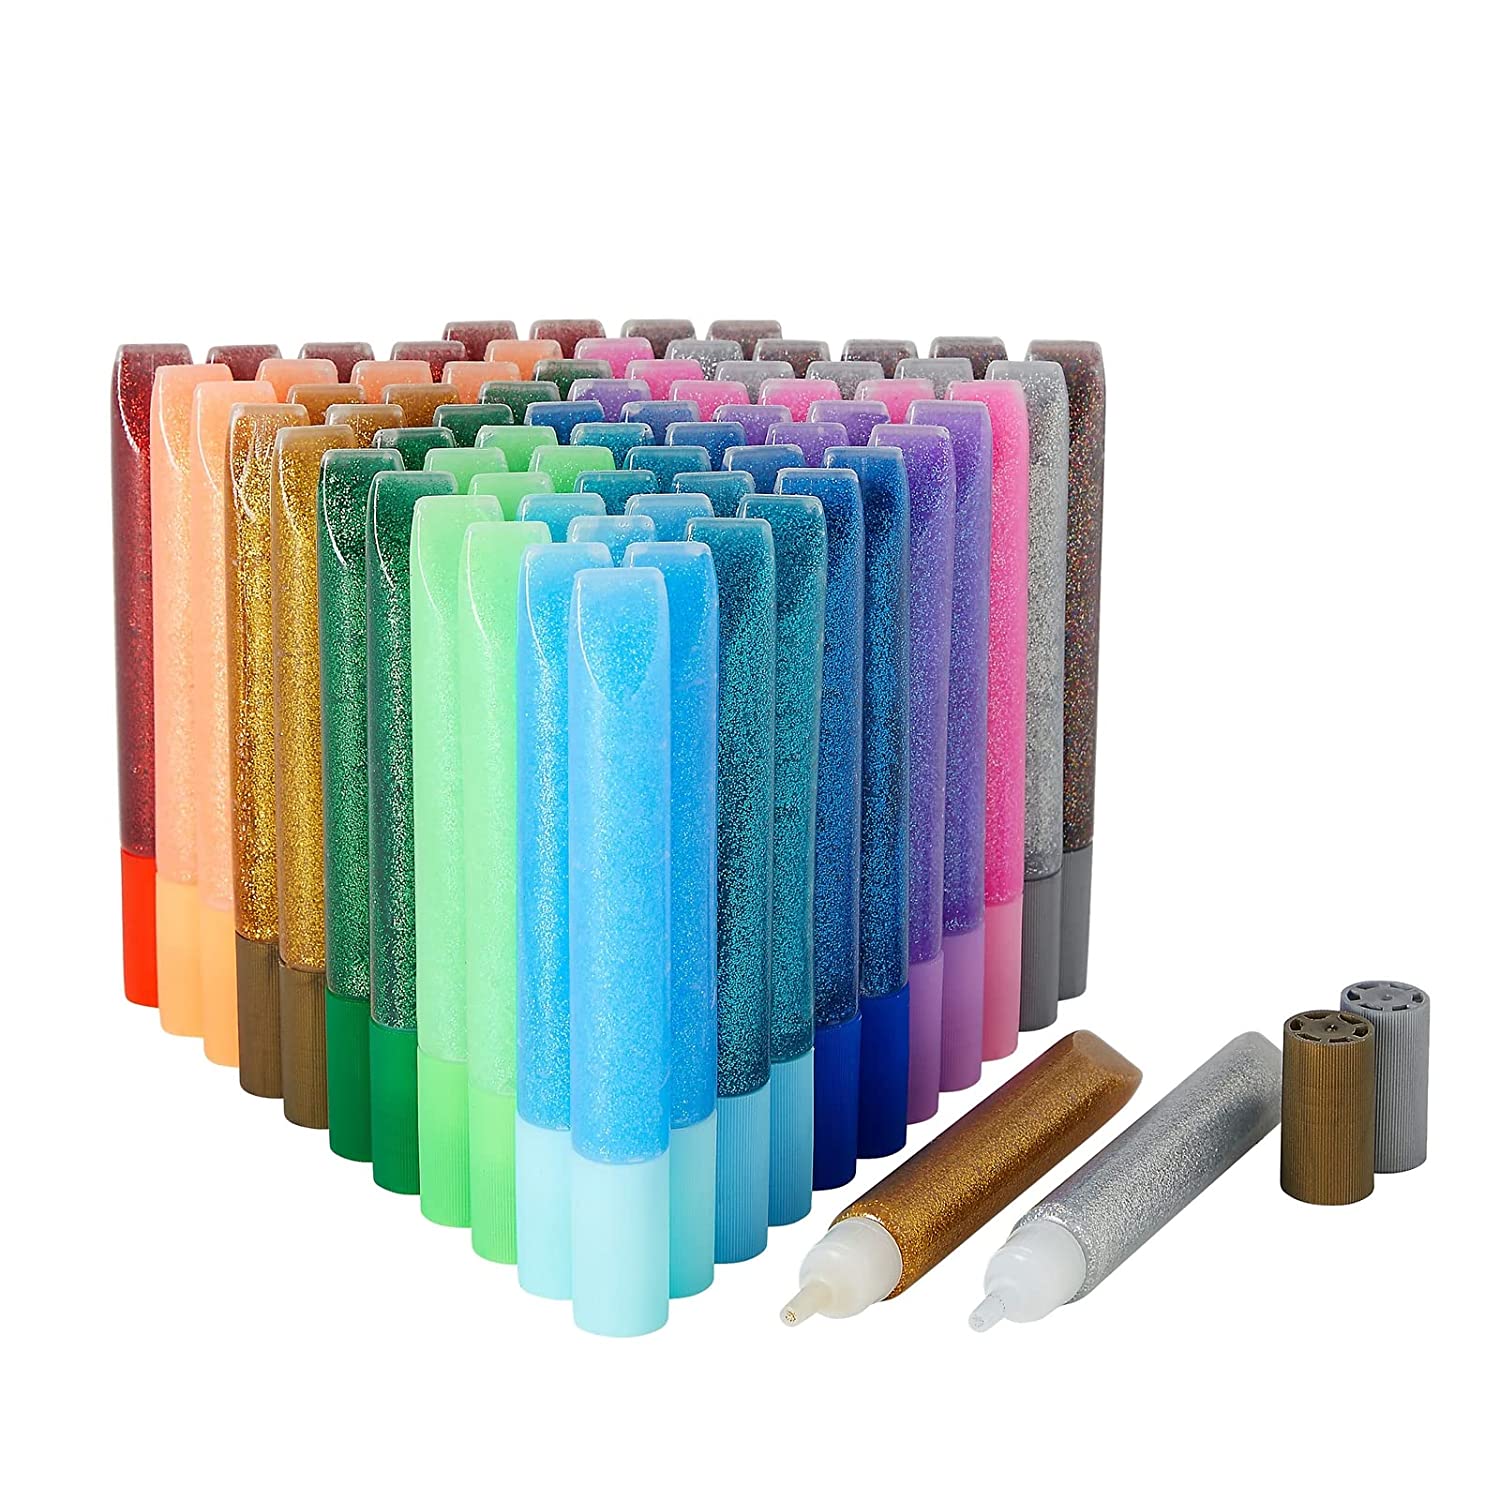 Glitter Glue (Value Pack - 24 Colors)